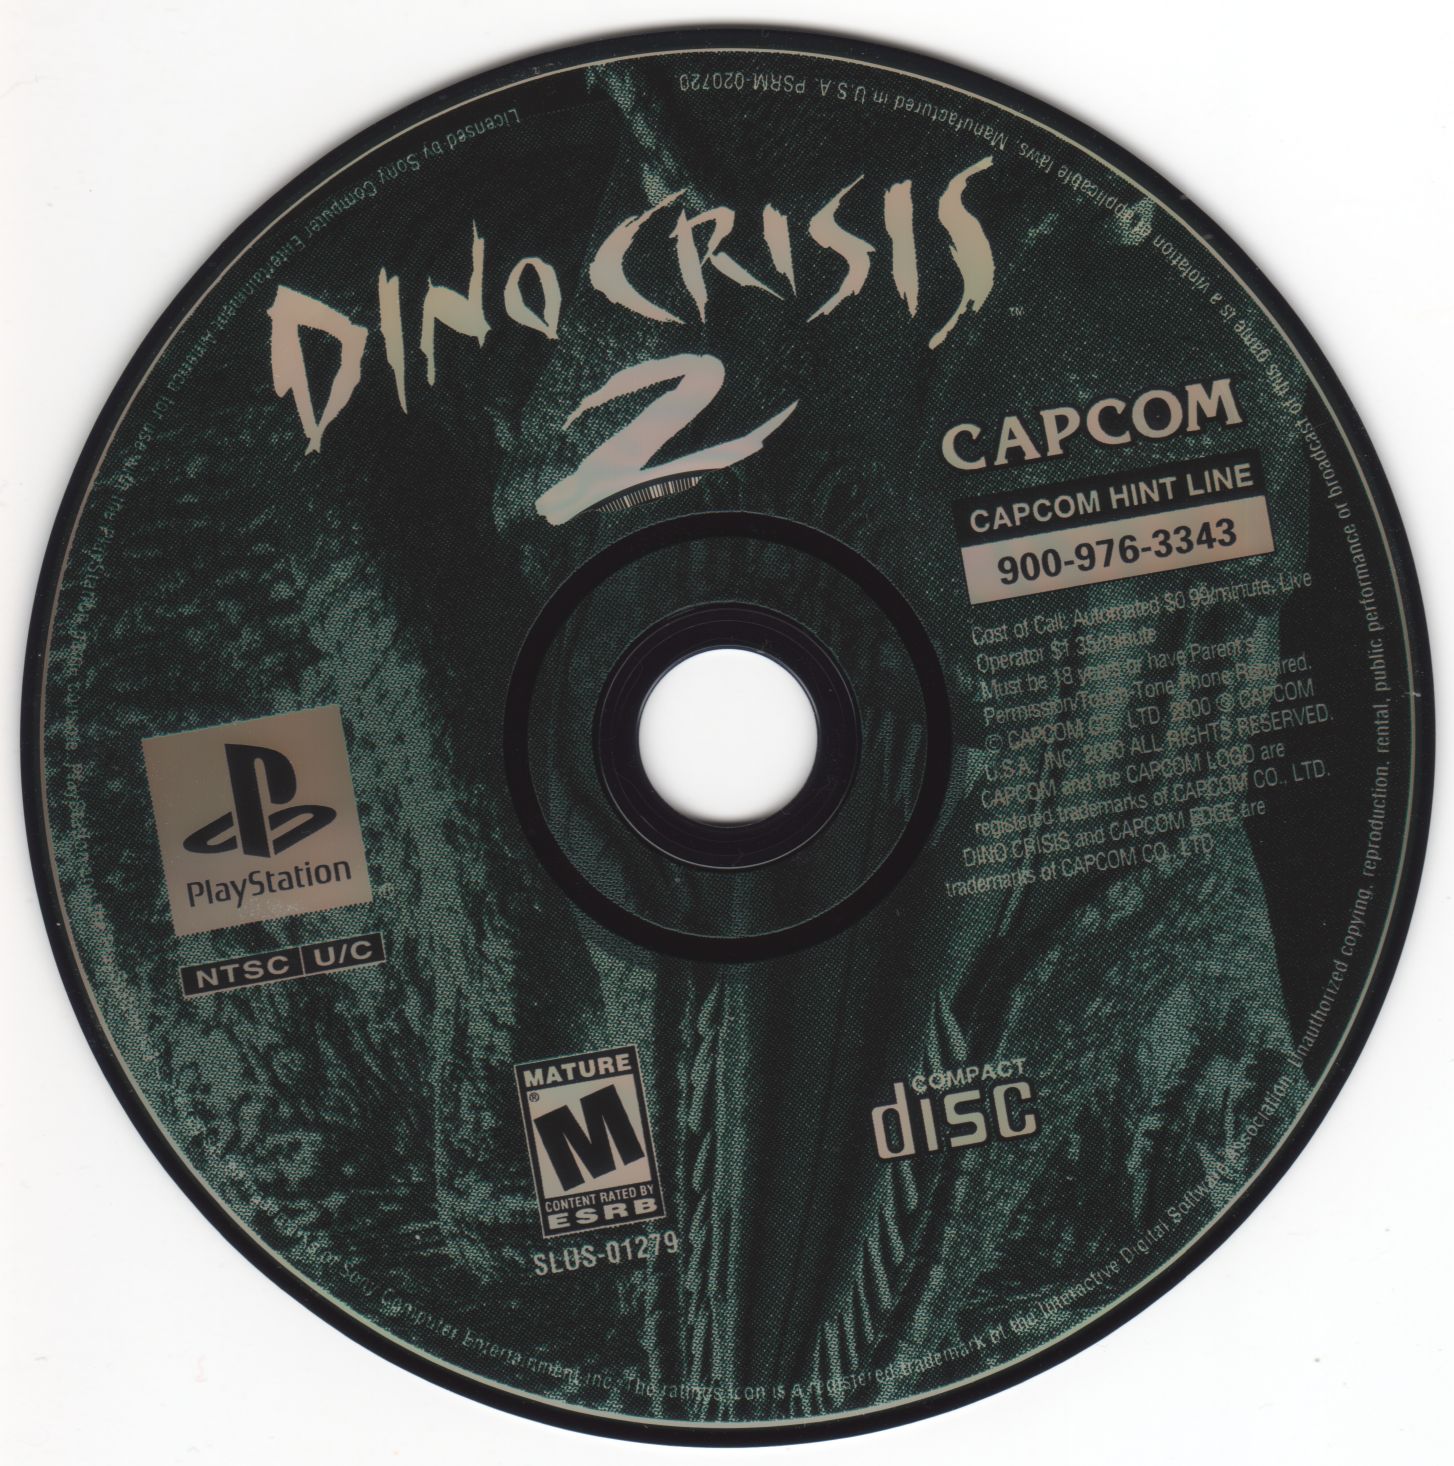 Dino Crisis 2 - NTSC Lourinhã E Atalaia • OLX Portugal